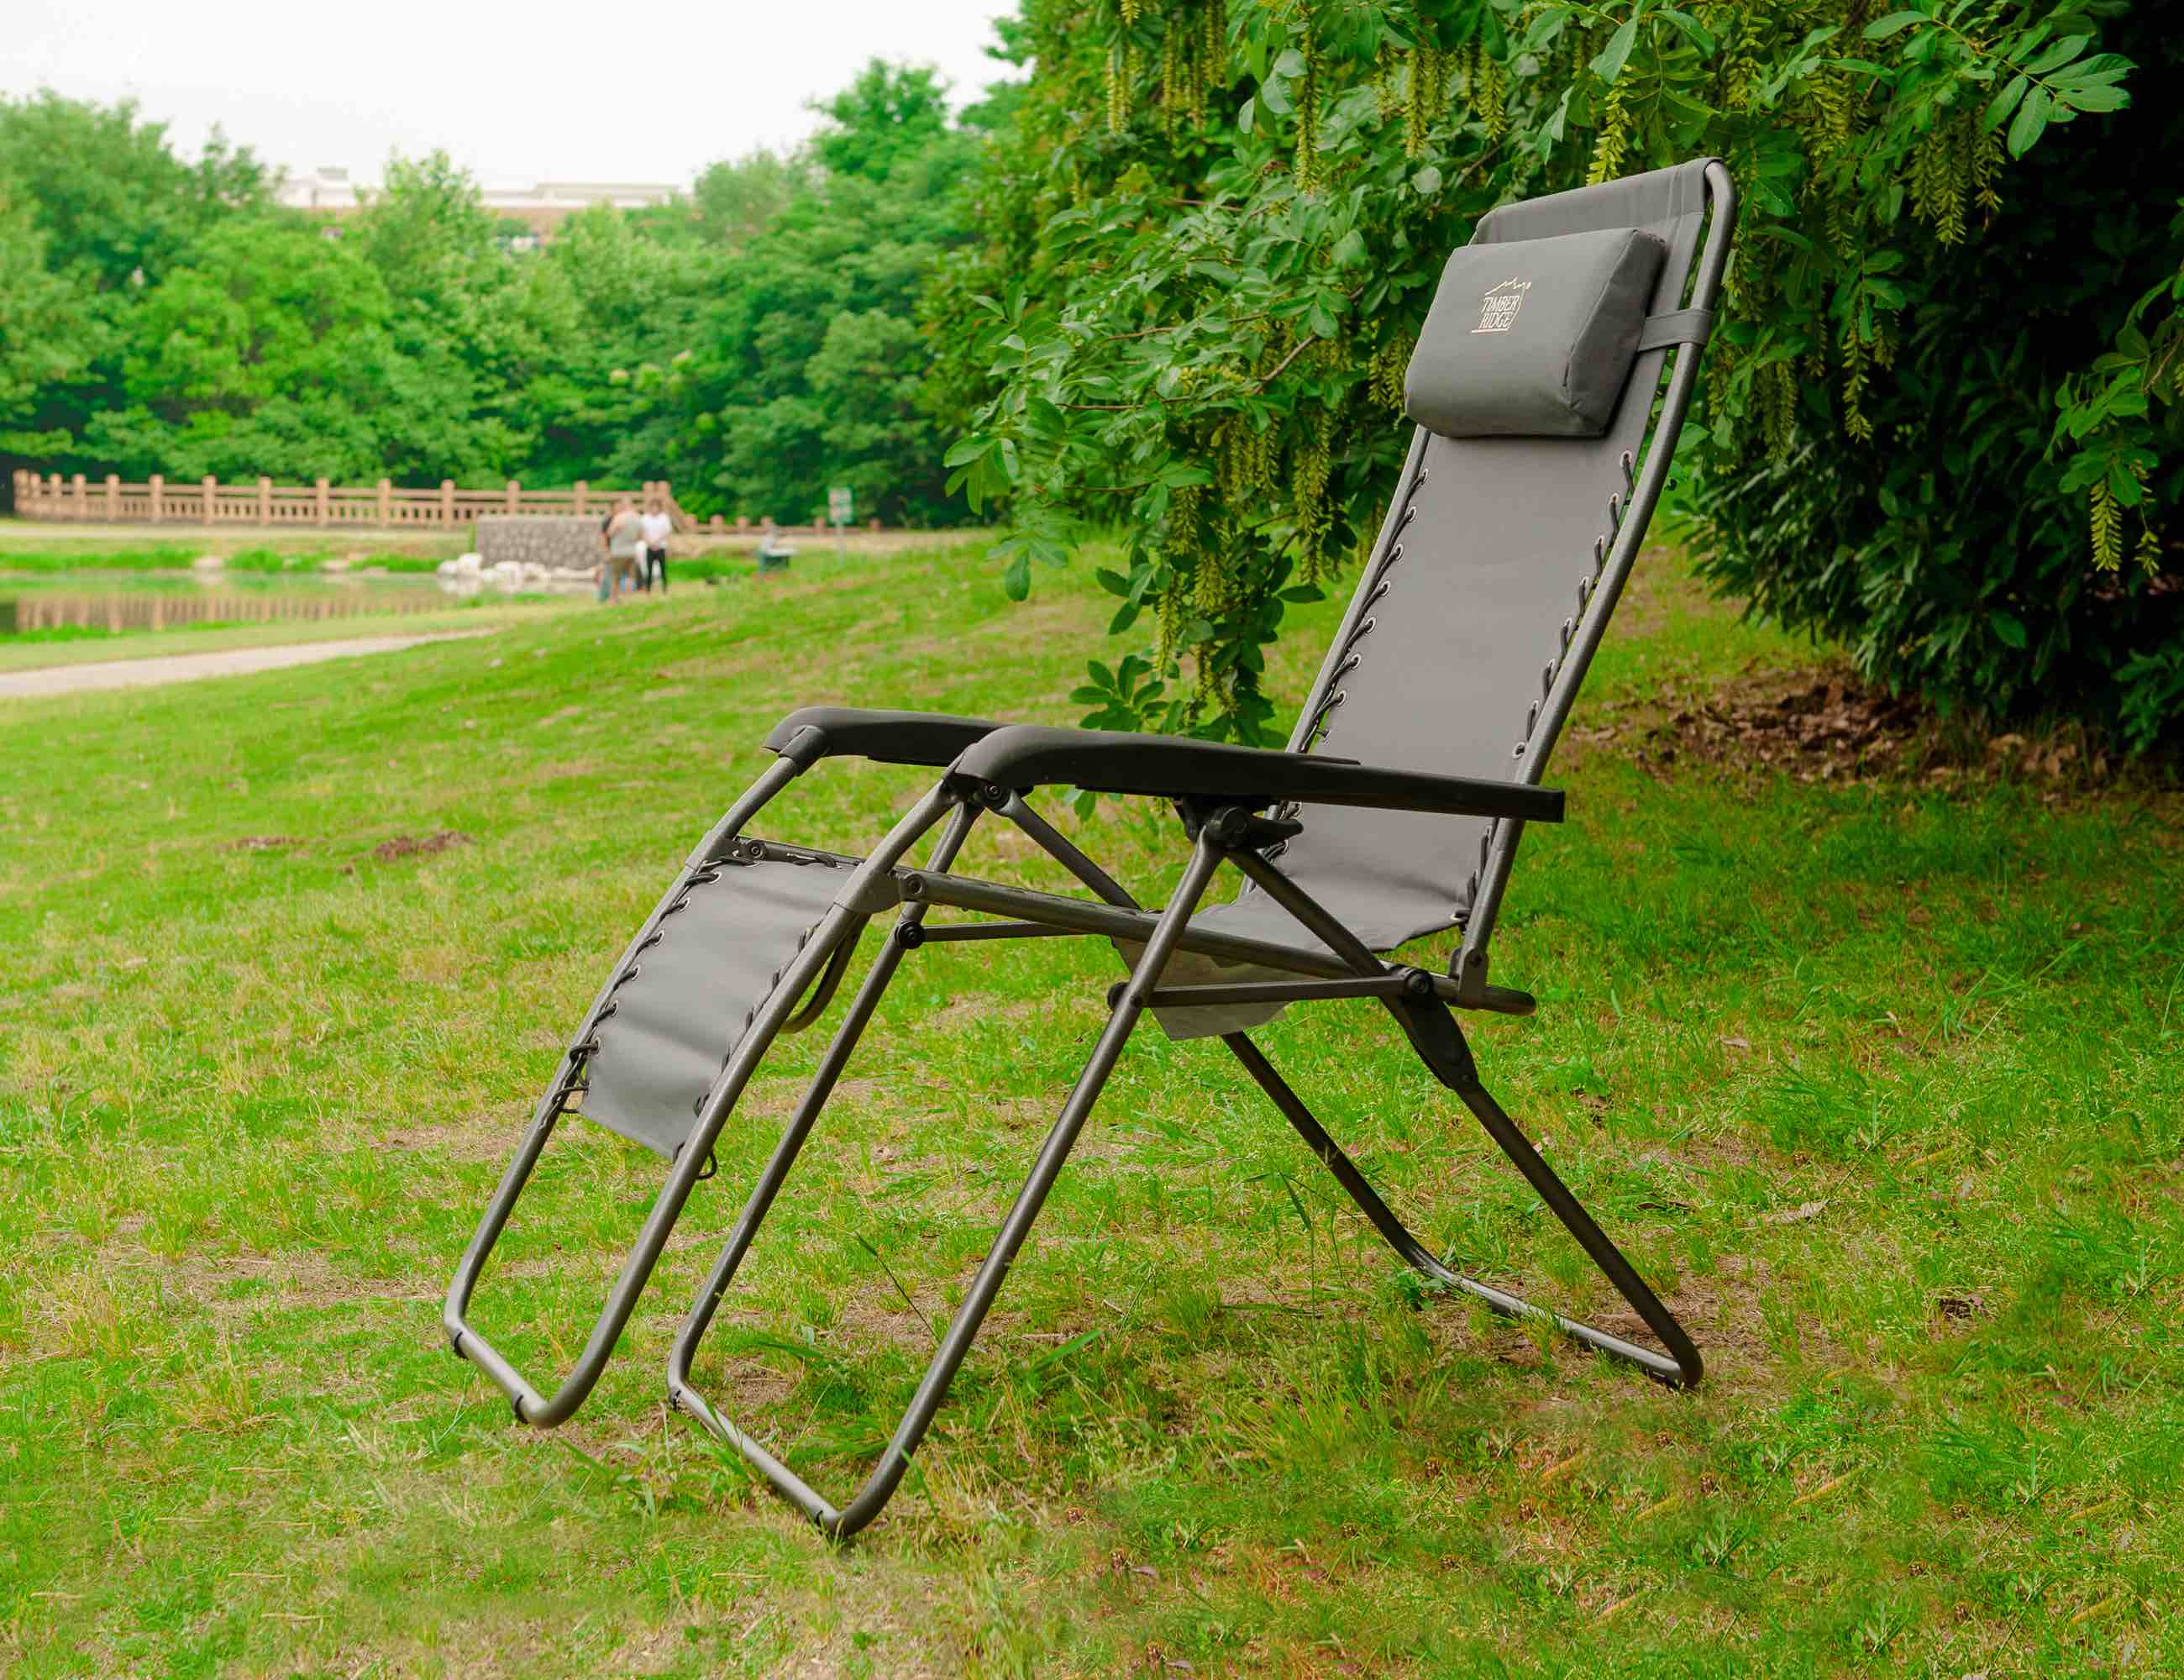 Best ideas about Timber Ridge Zero Gravity Chair
. Save or Pin Timber Ridge Zero Gravity Chair Gad Flow Now.